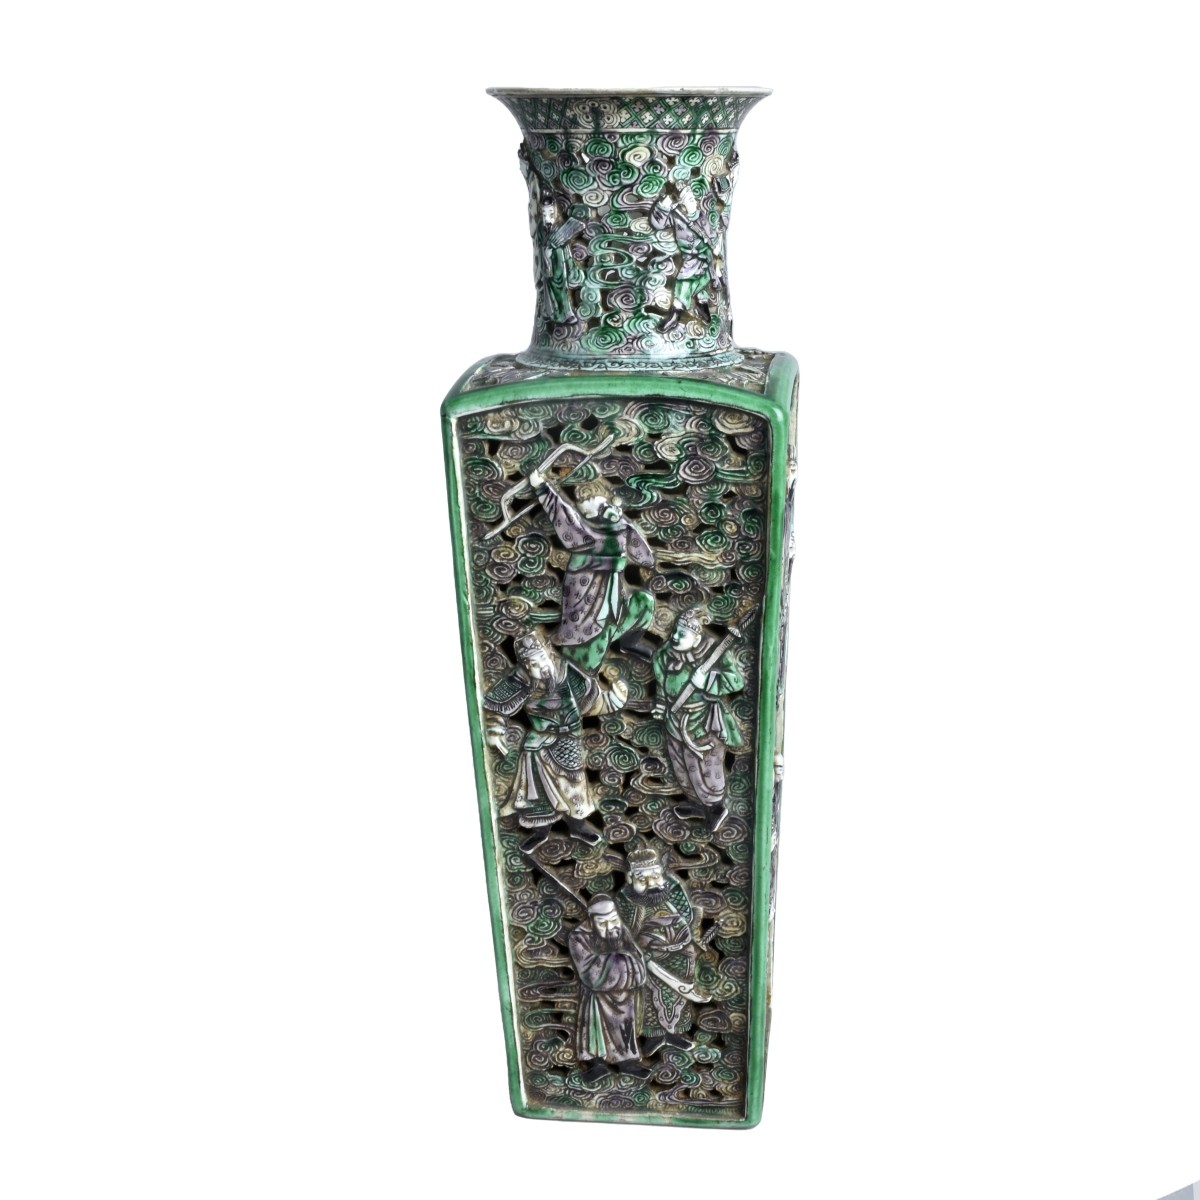 Antique Chinese Famille Vert Vase